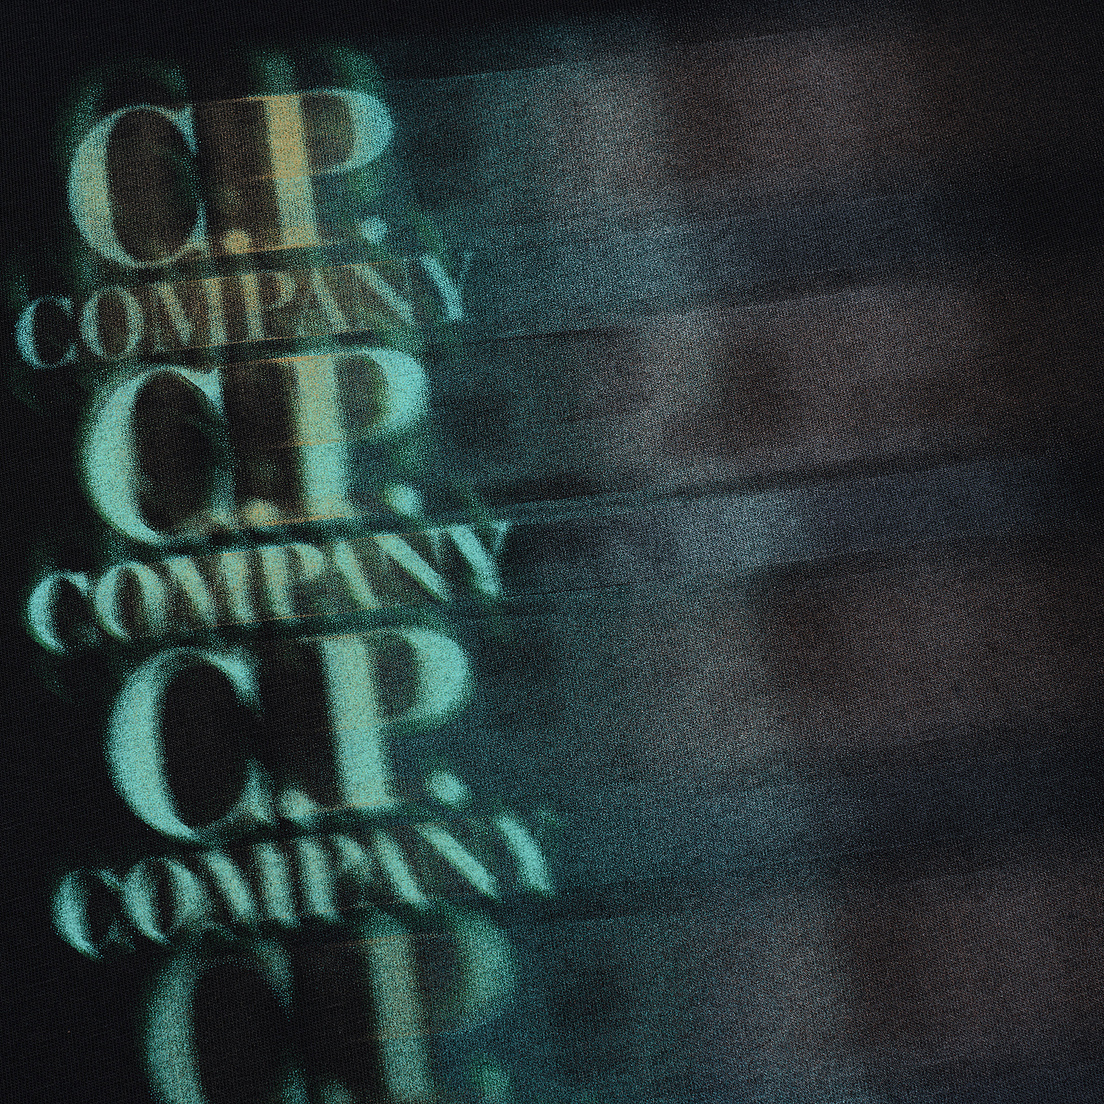 C.P. Company Мужская футболка Blurred Graphic More Logo